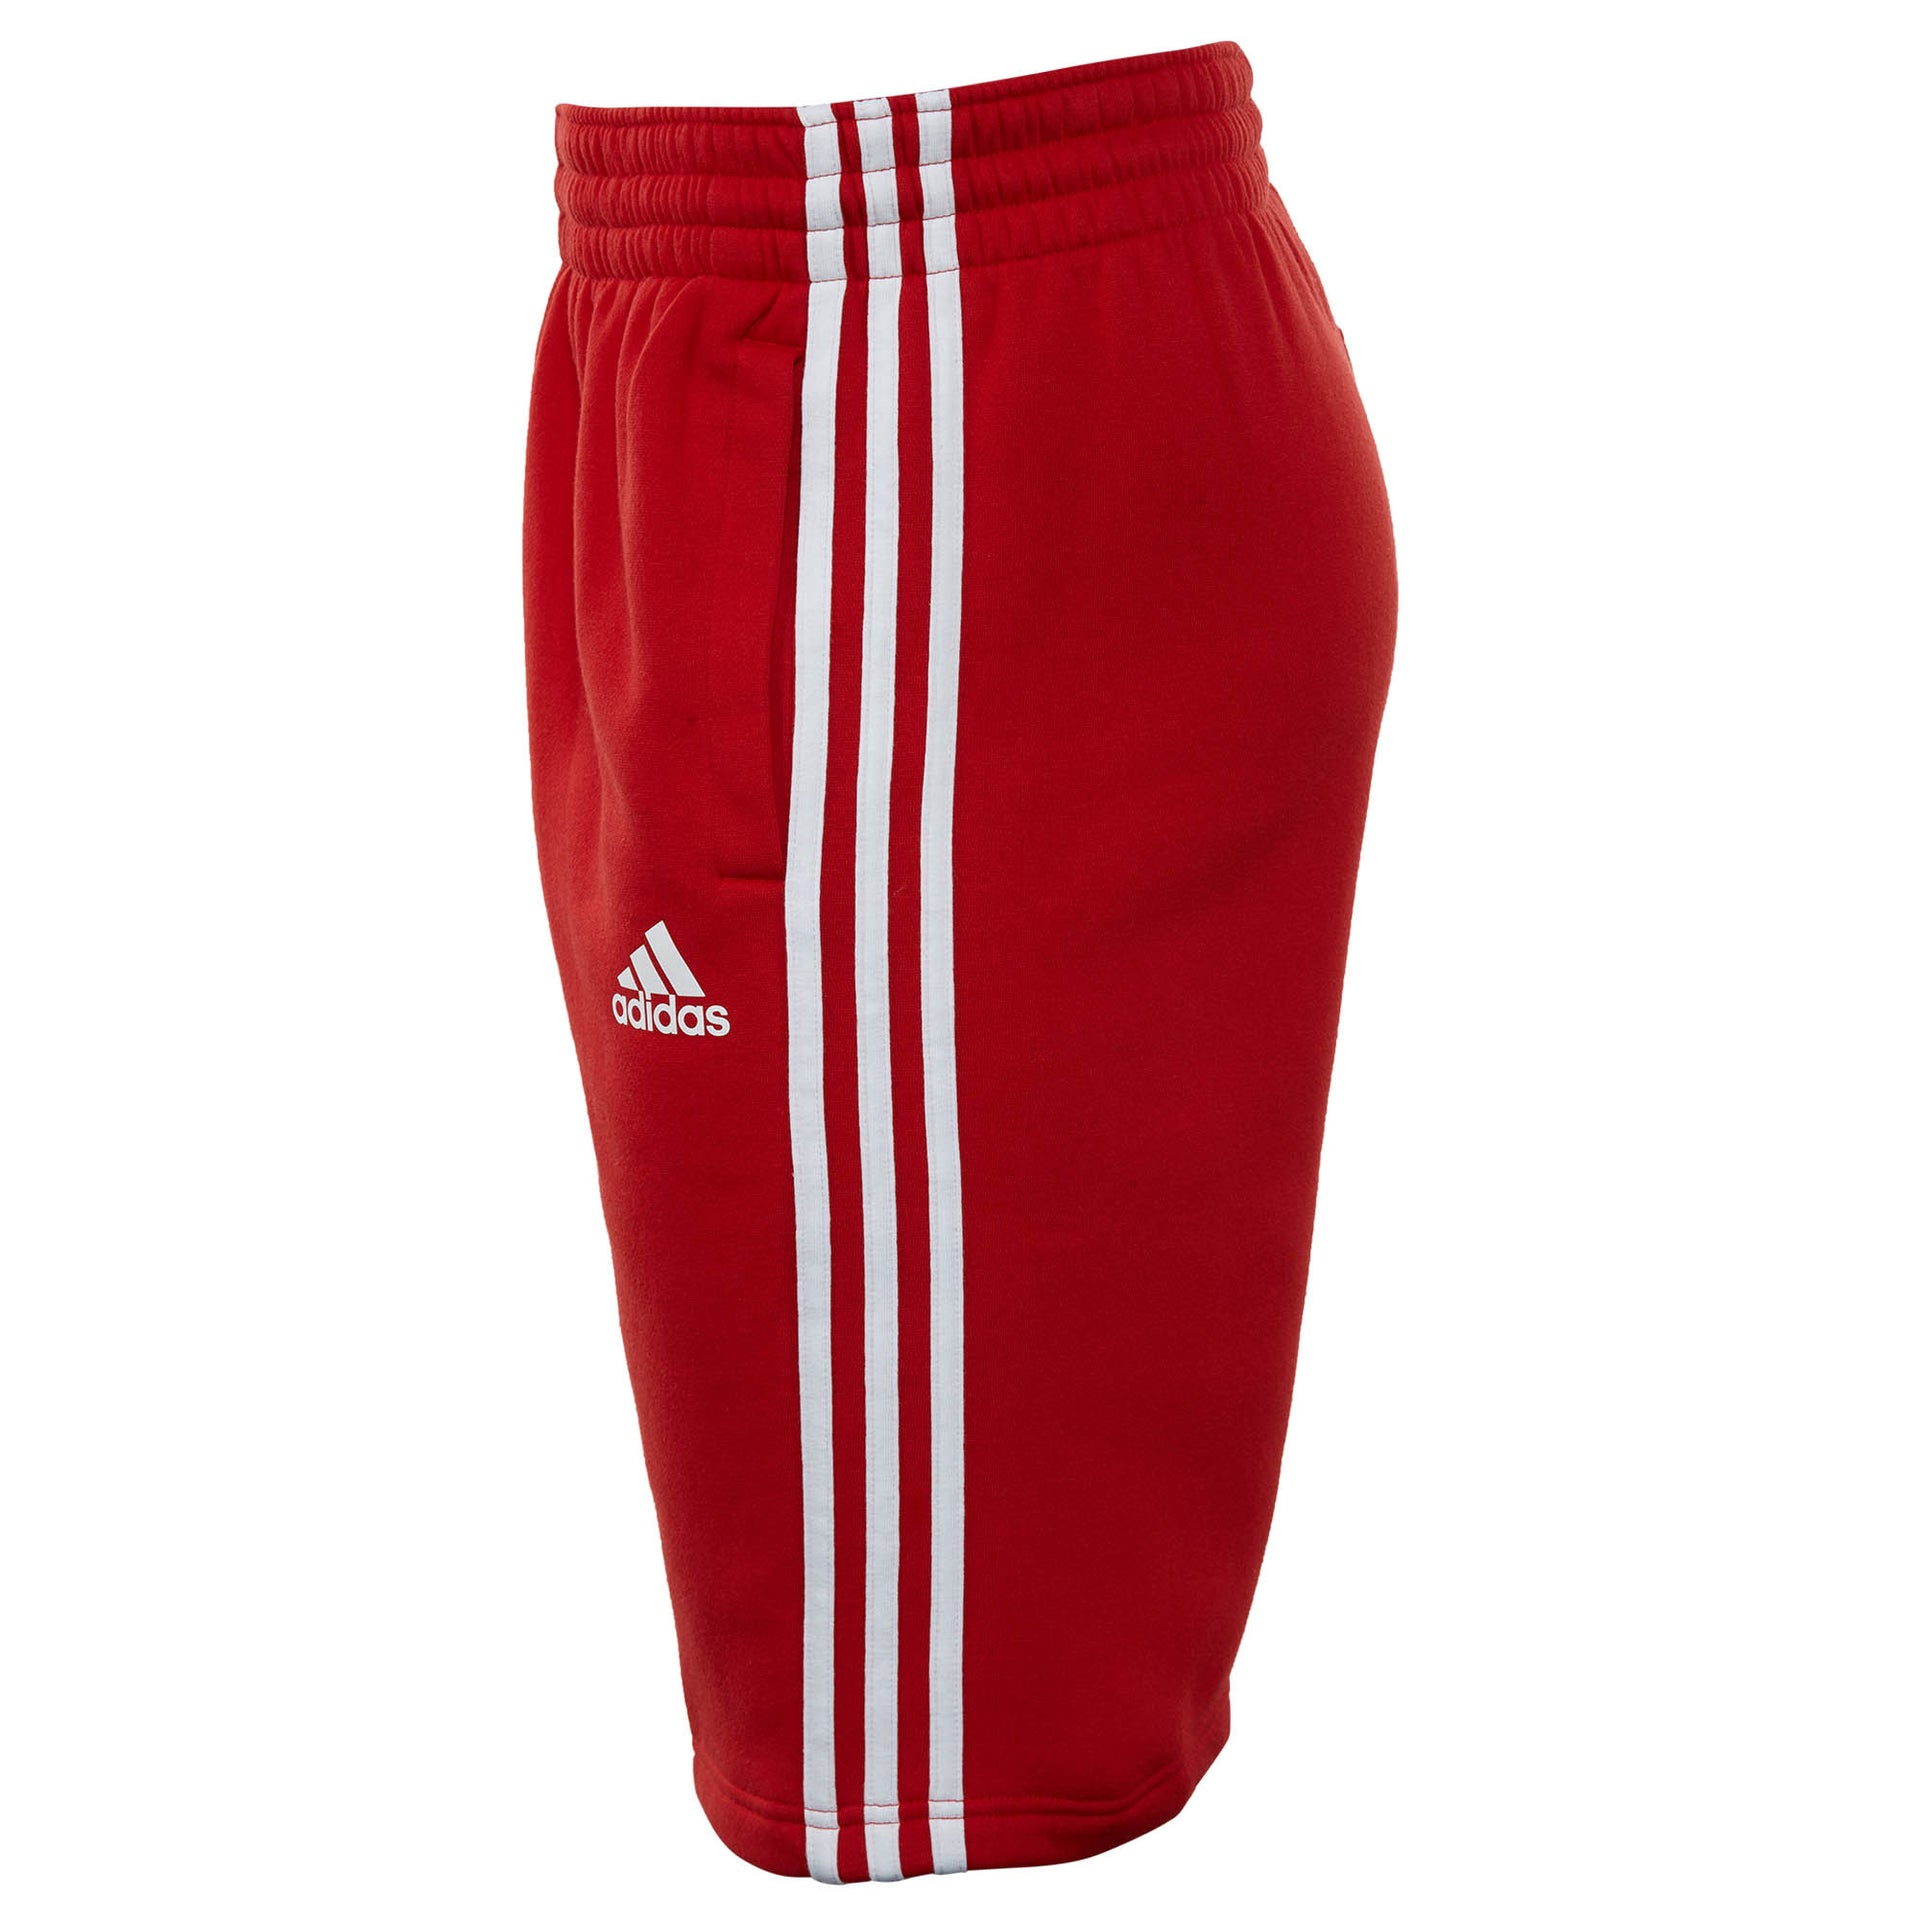 Adidas Slim 3 Stripe Shorts Mens Style : Bj9317